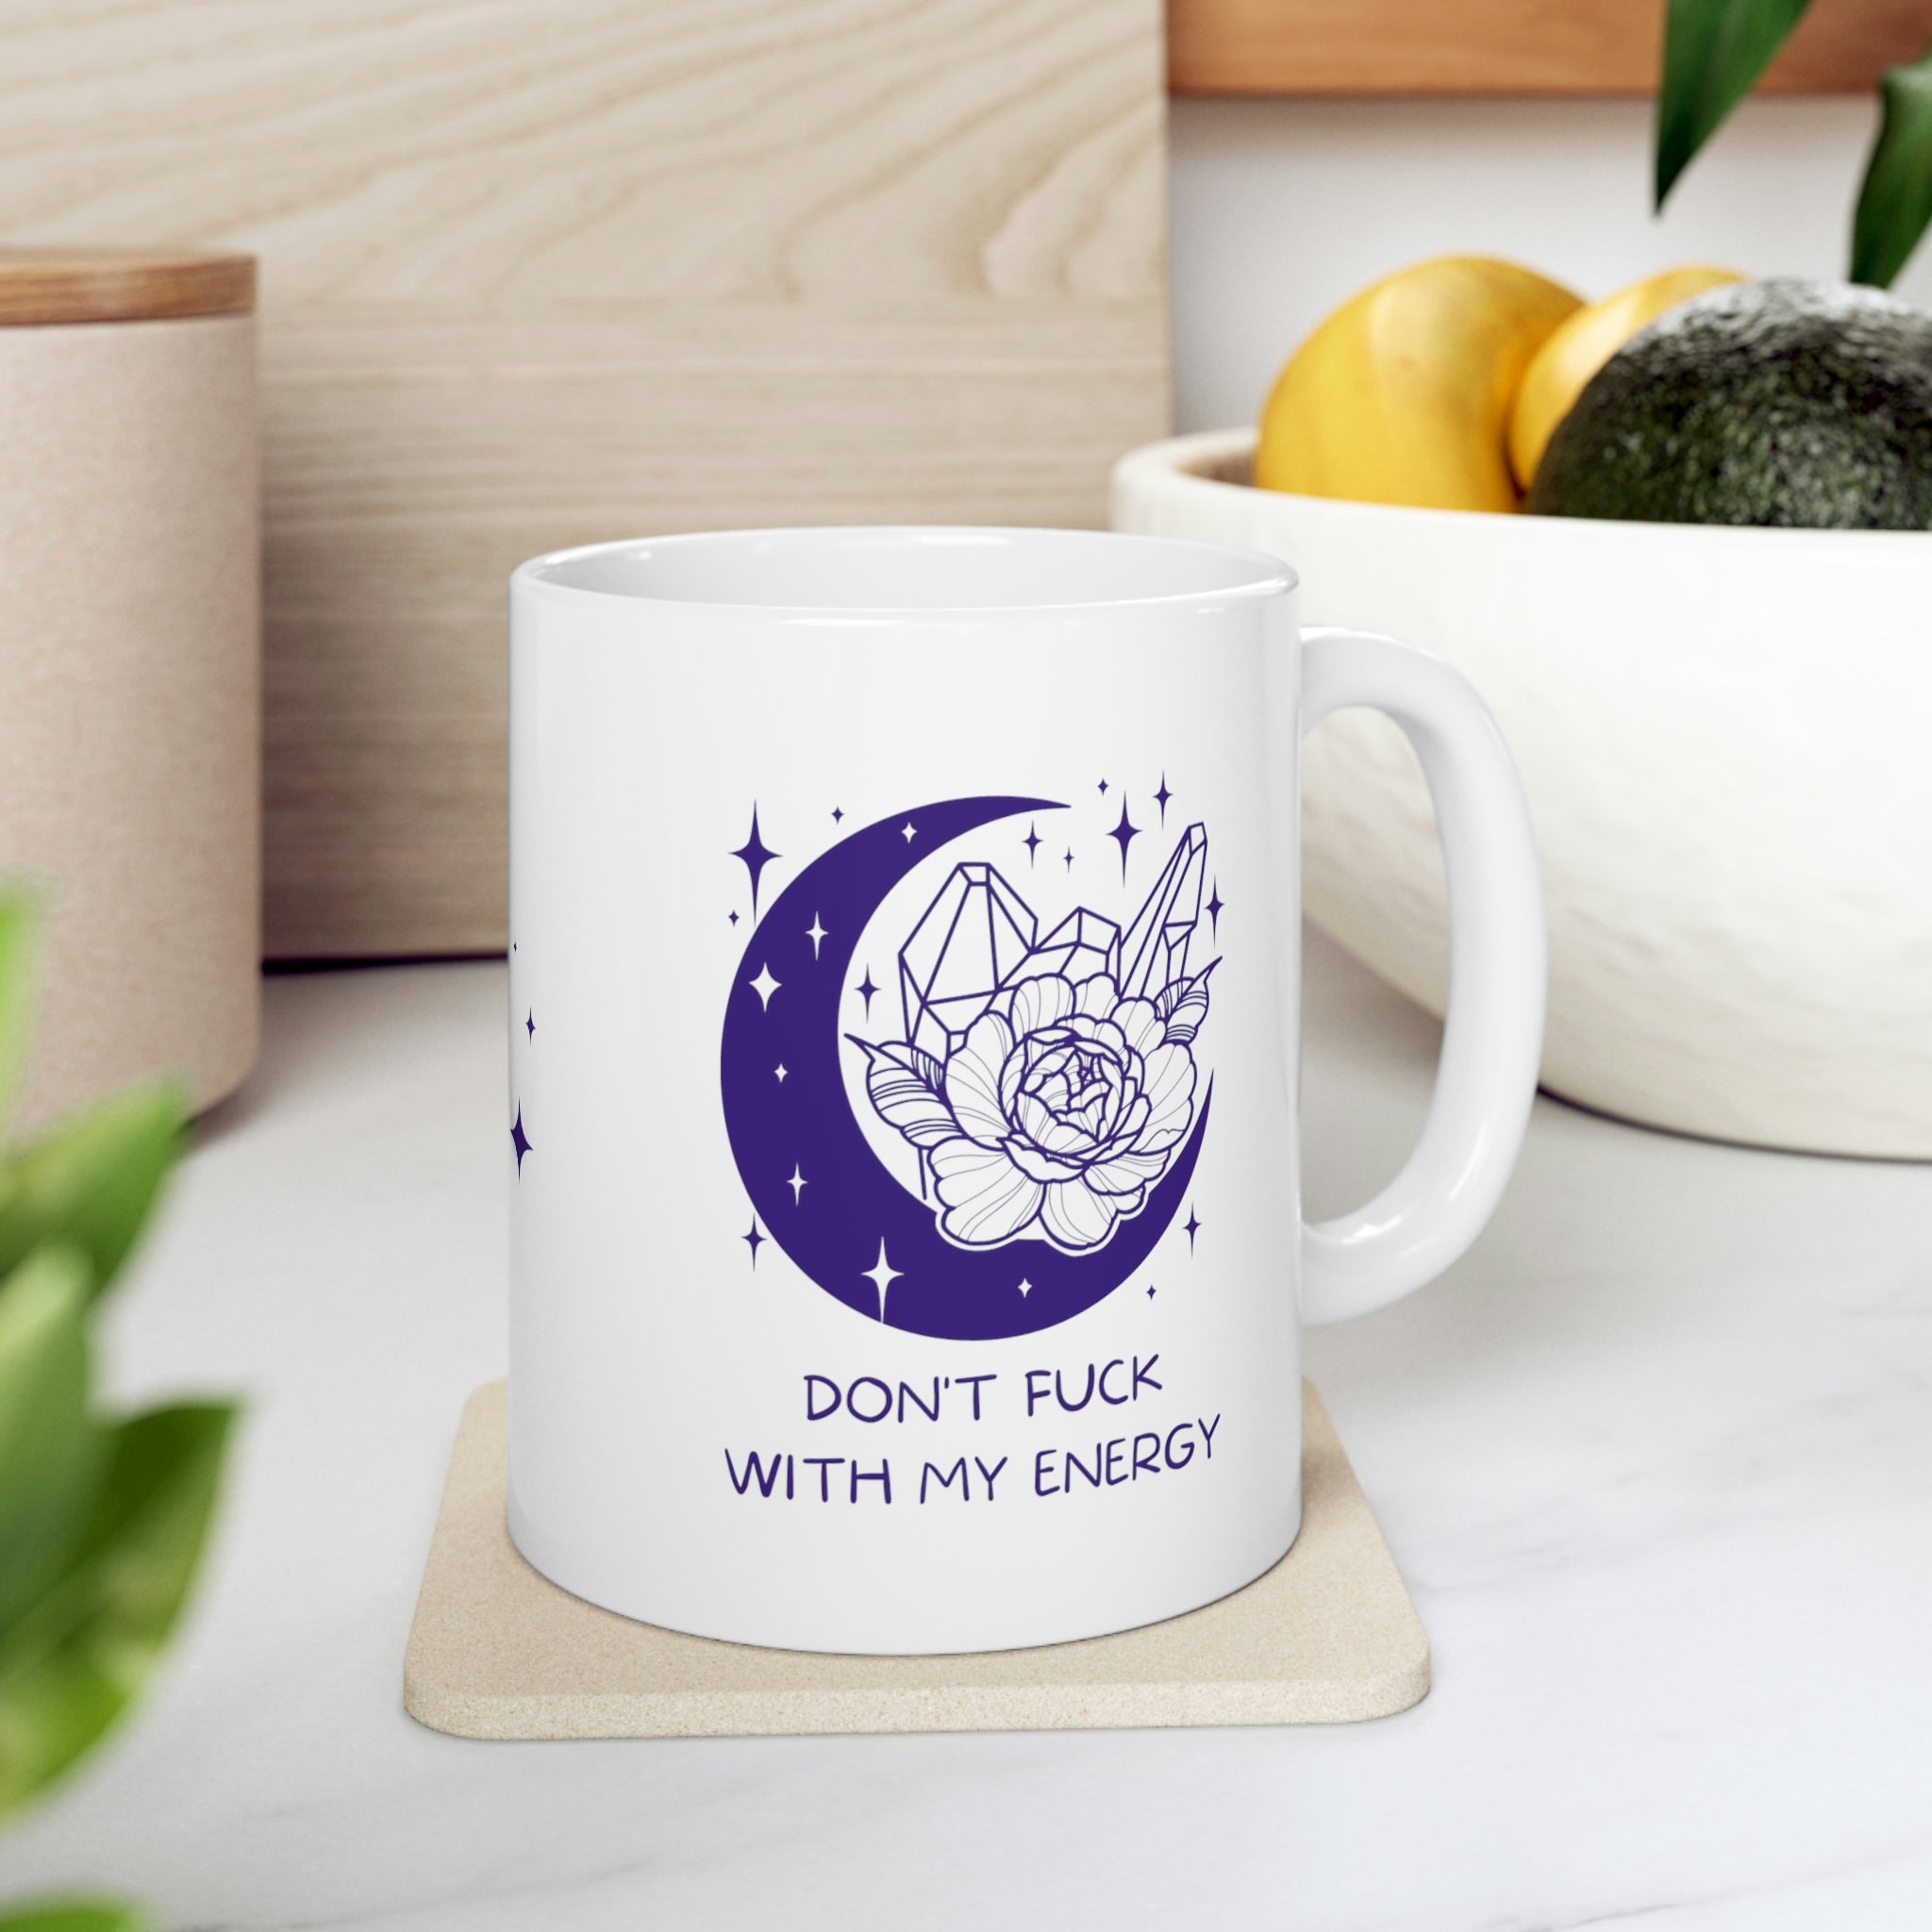 Don't Fuck With My Energy Ceramic Mug